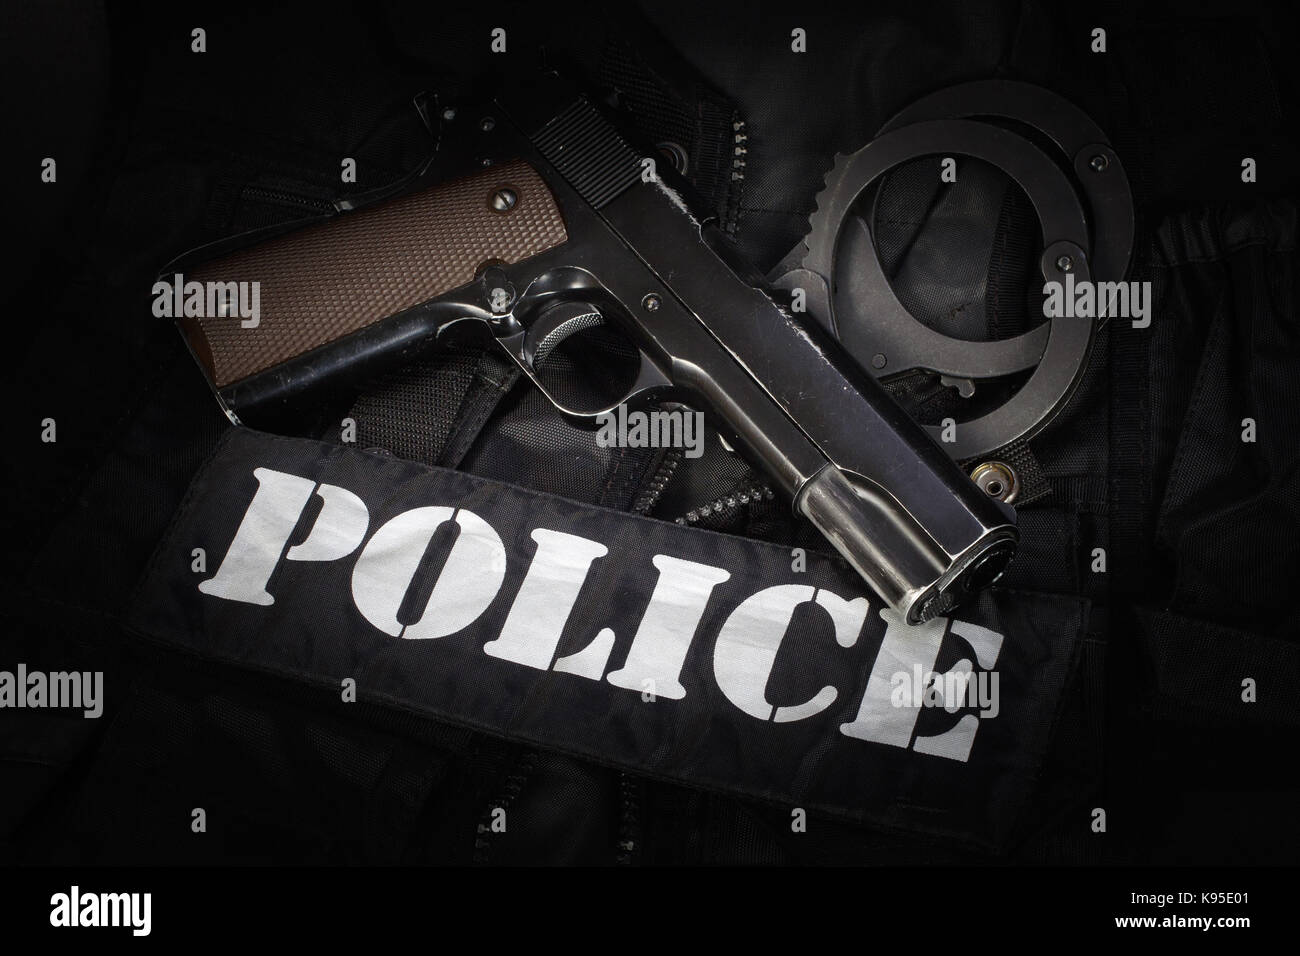 Police equipment on black background Stock Photo - Alamy